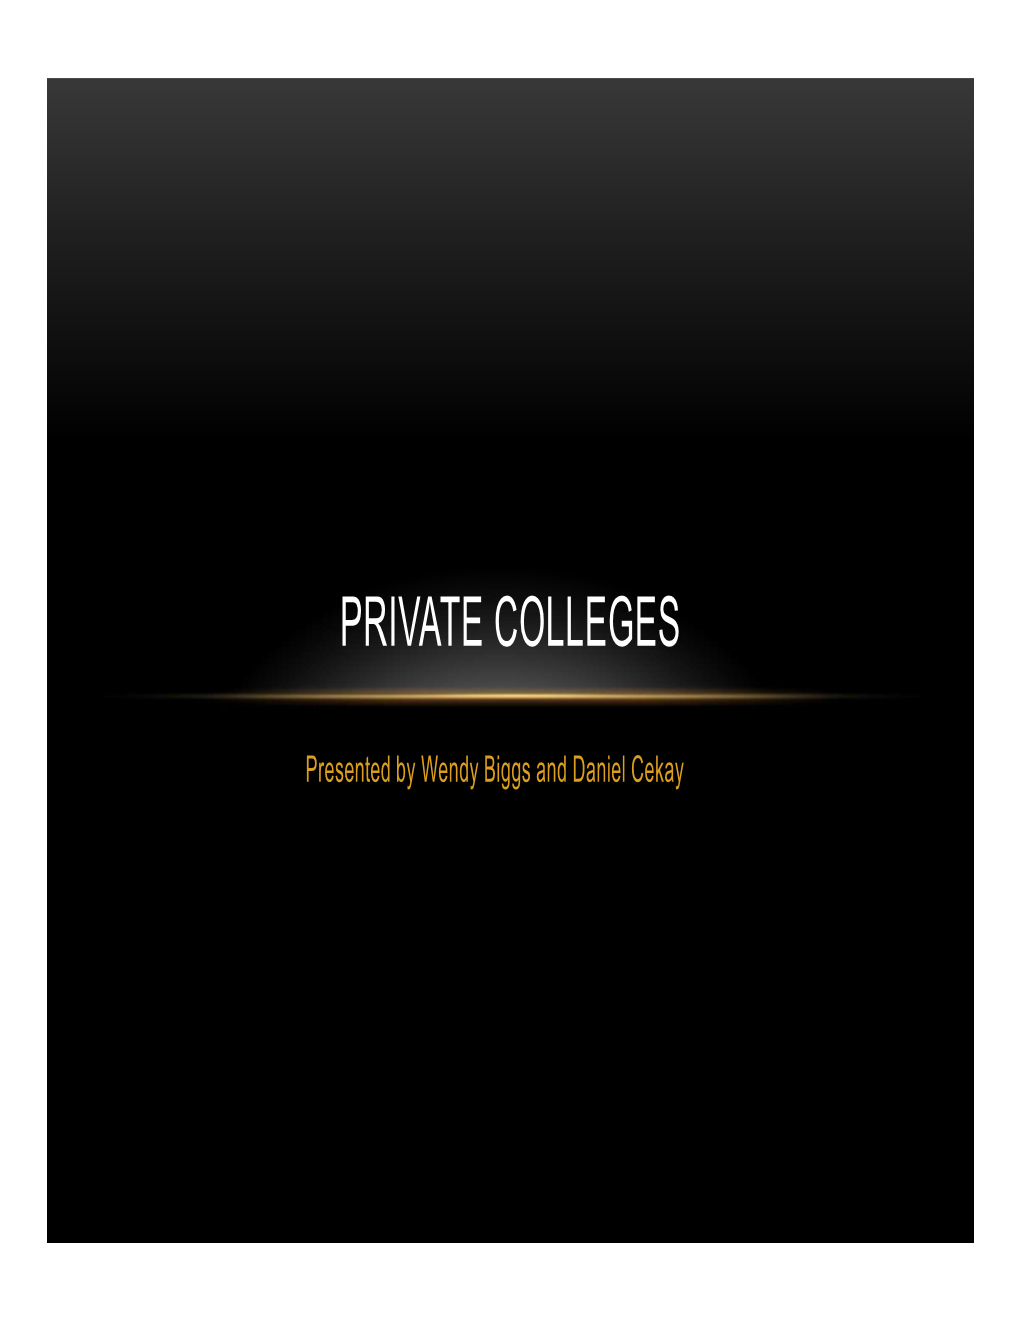 Private Colleges1-13 [Compatibility Mode]